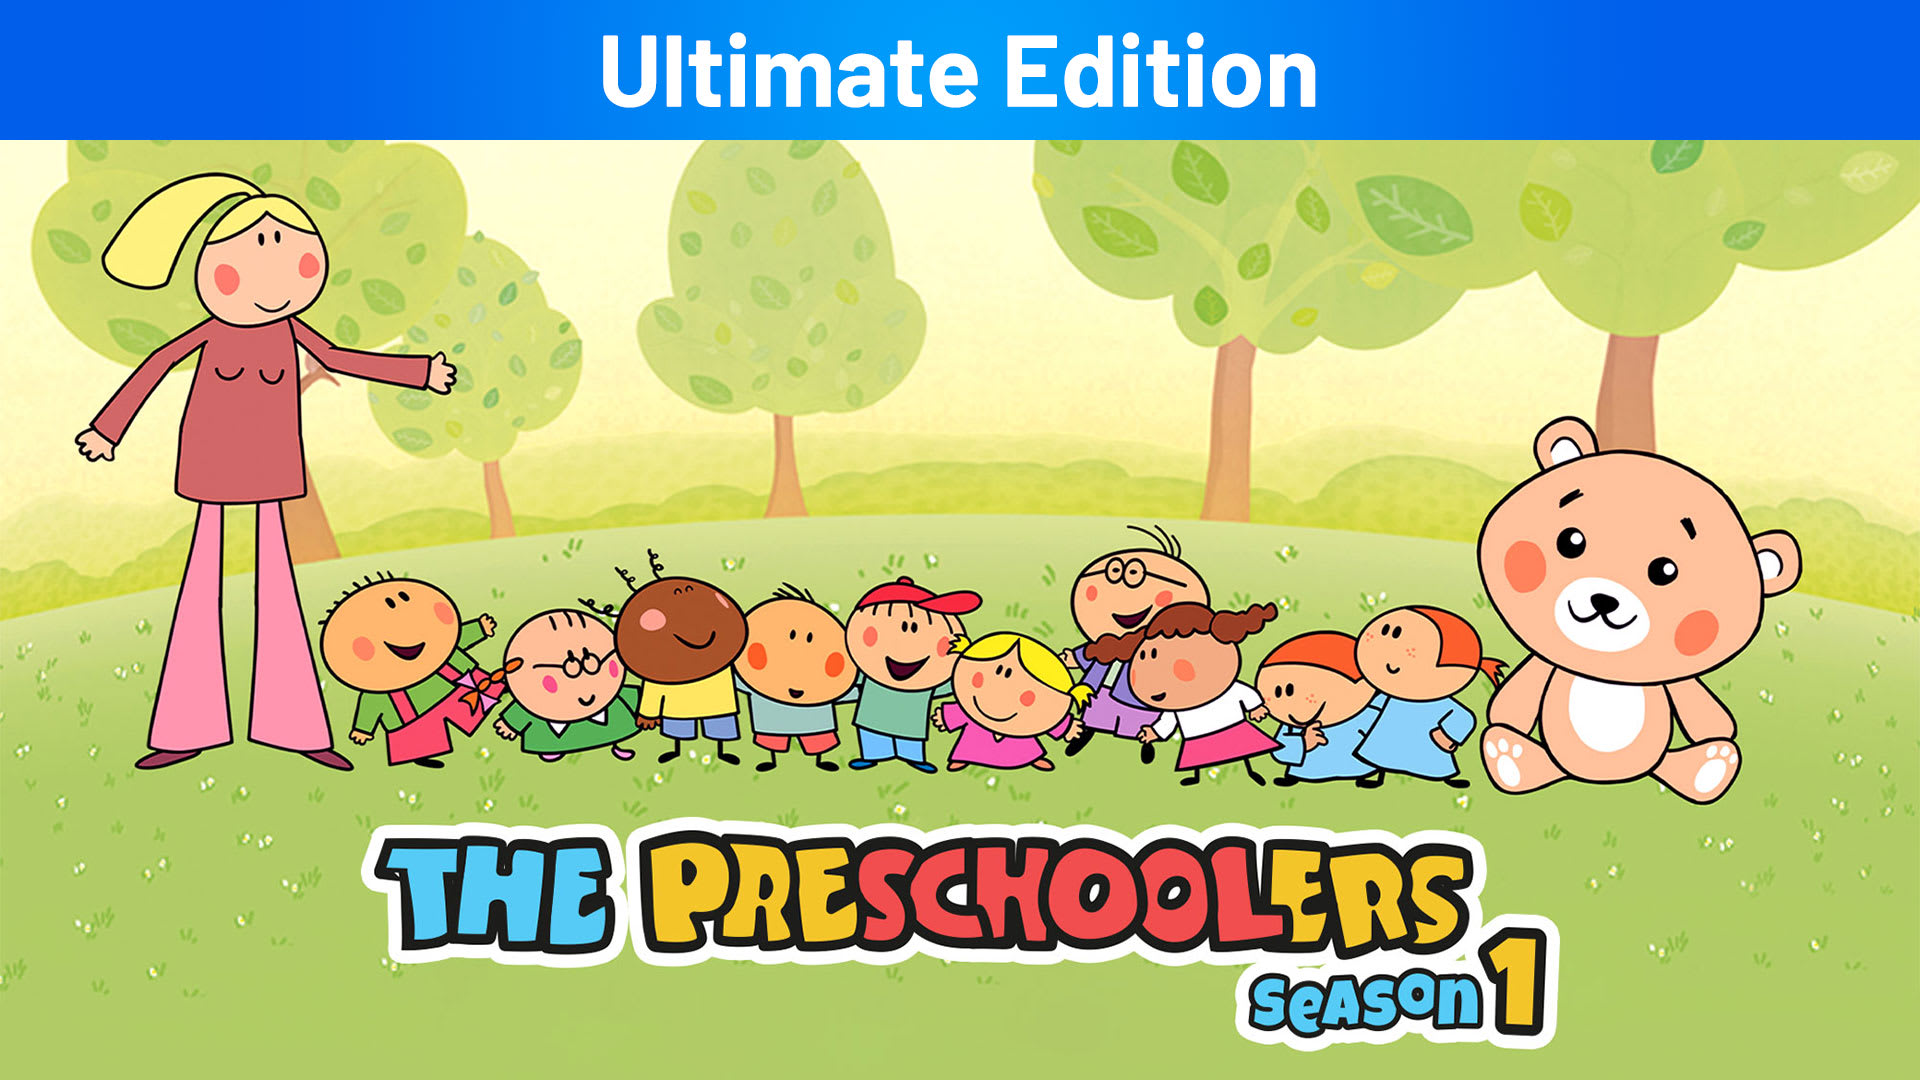 The Preschoolers: Season 1 Ultimate Edition